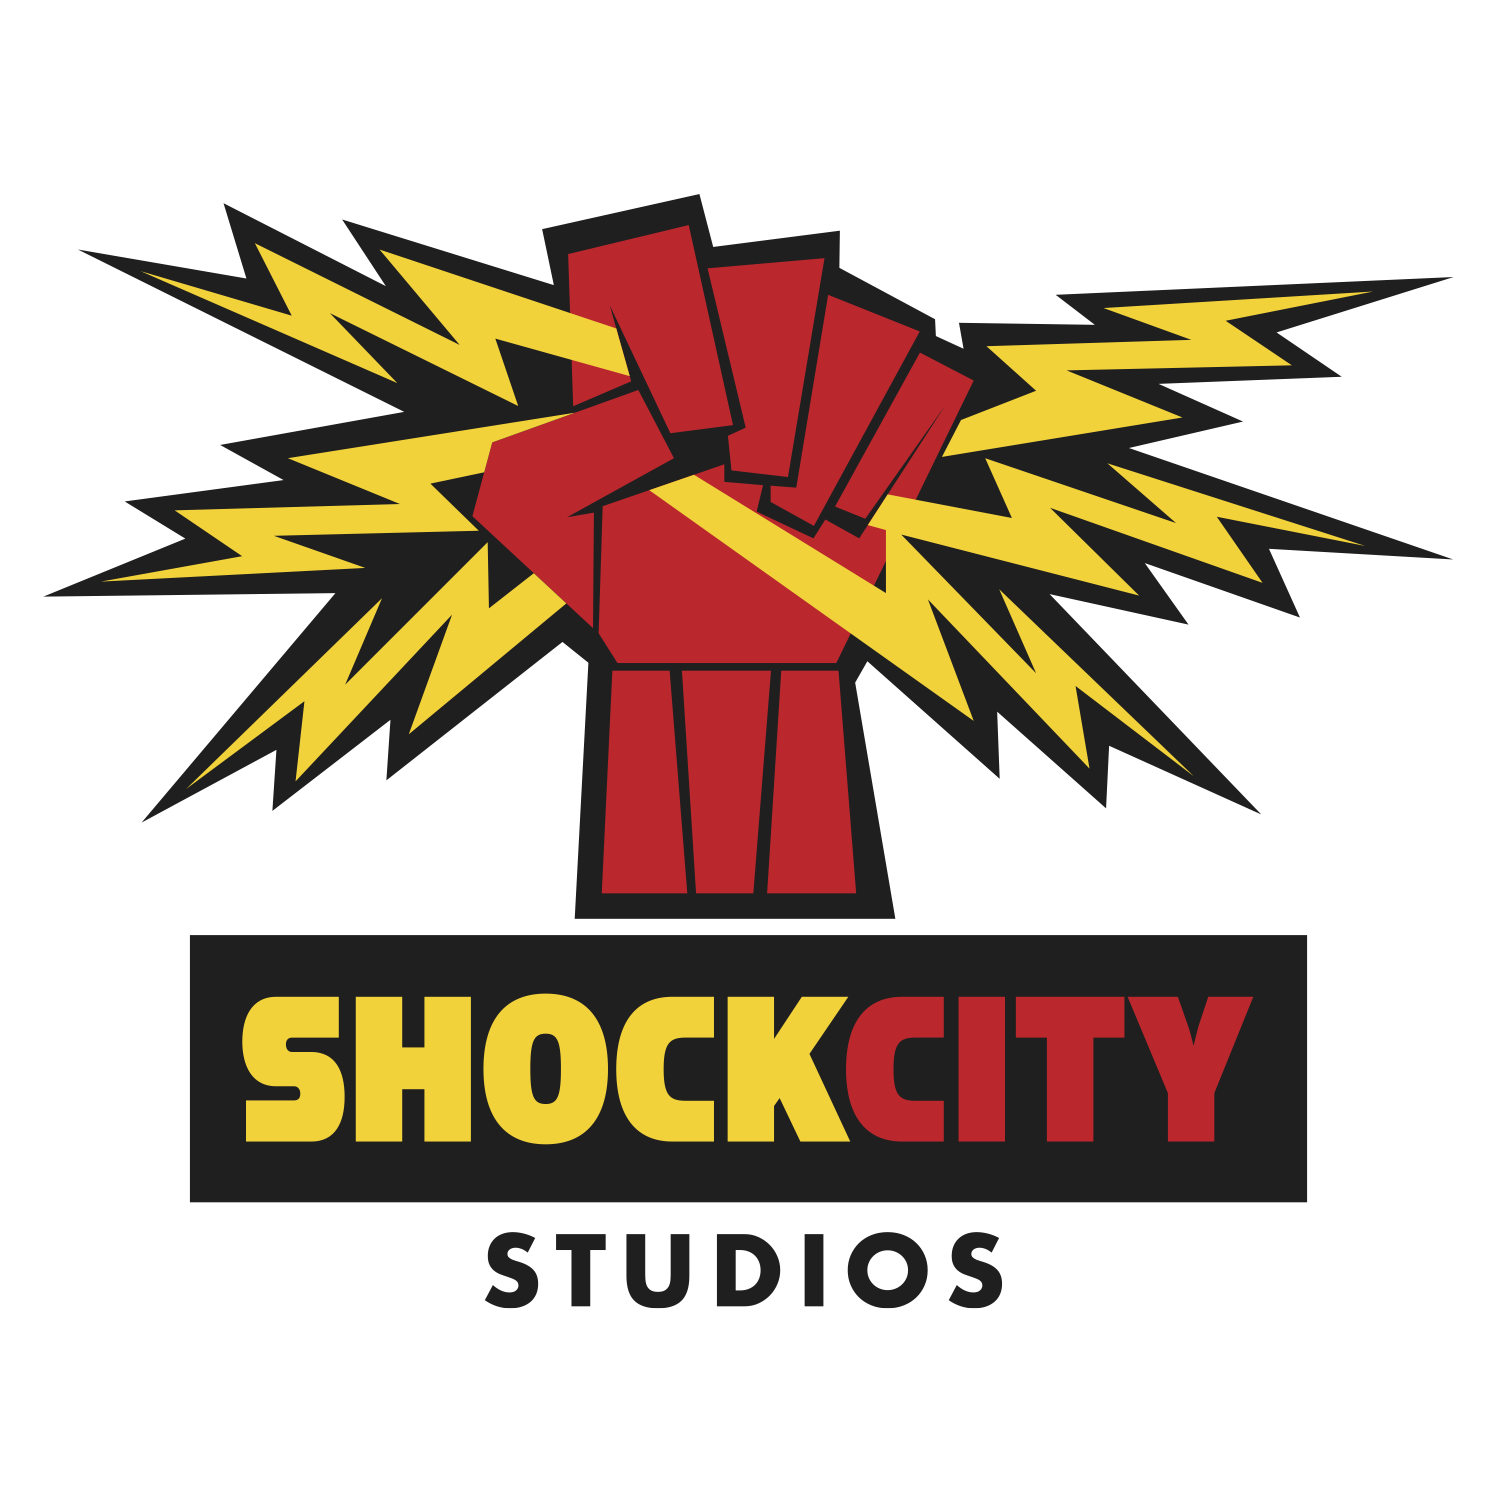 Shock City Studios Full Color 2019 Logo.png